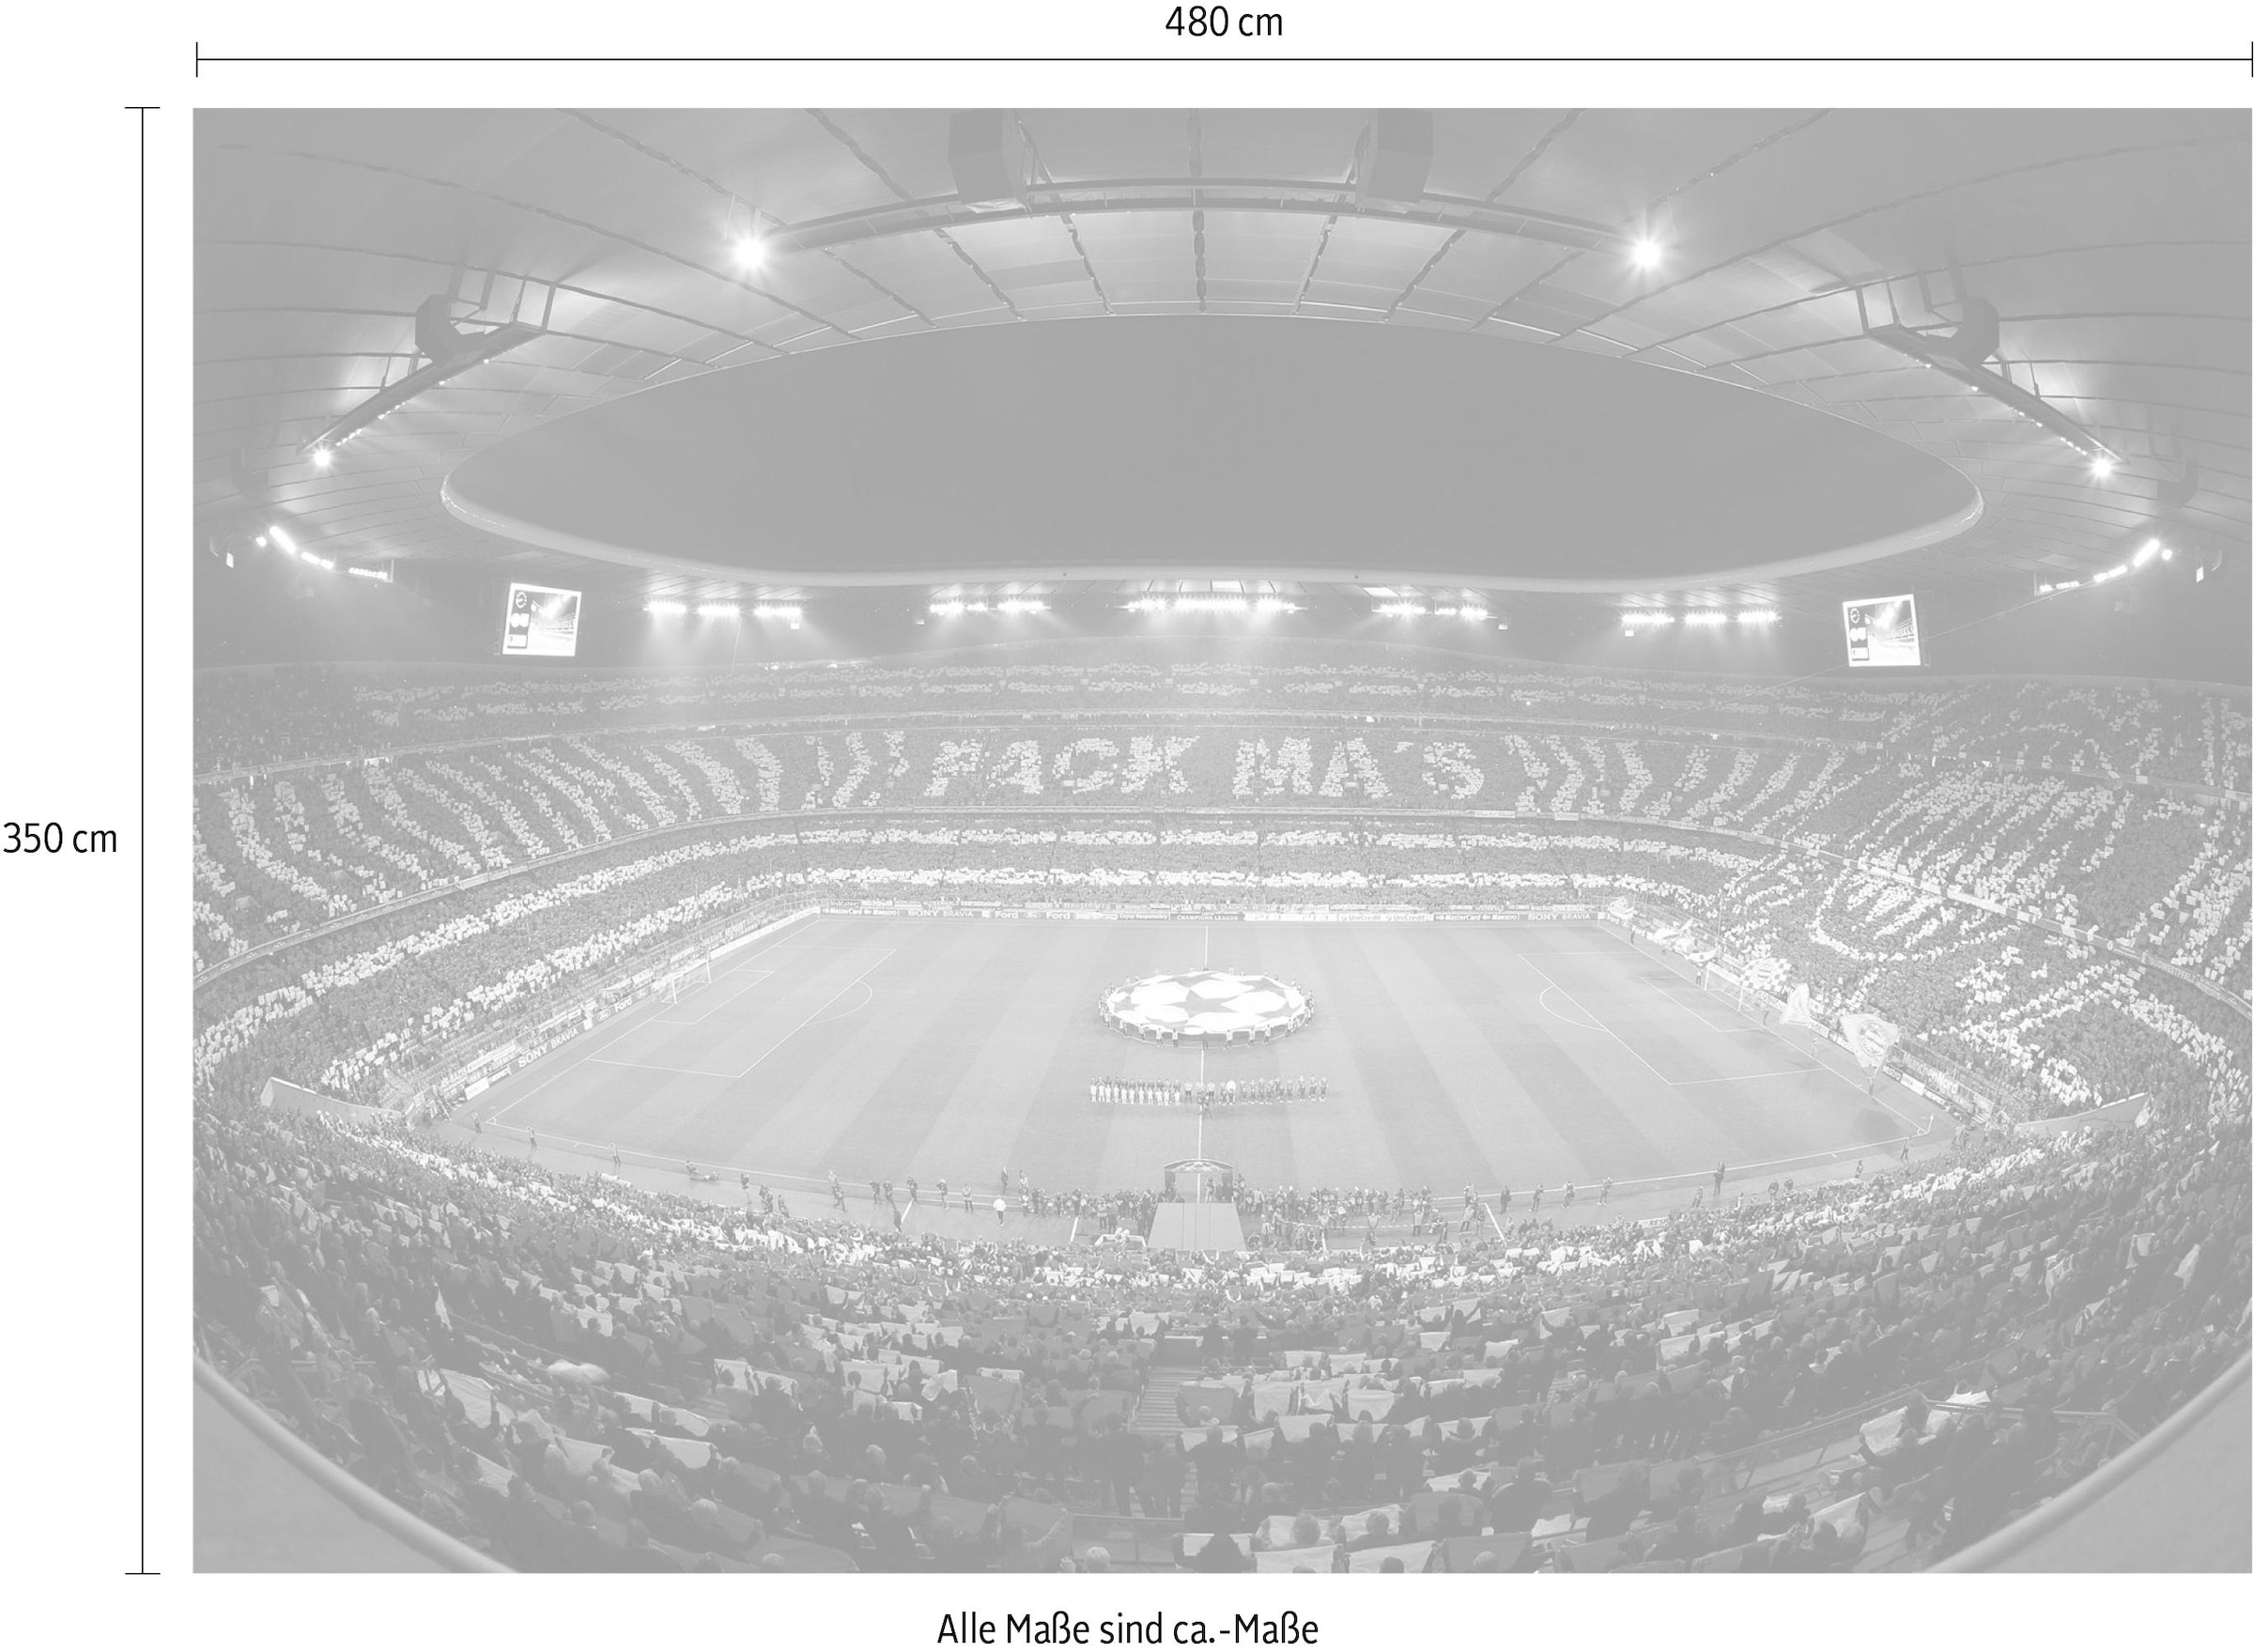 Wall-Art Fototapete »Bayern München Stadion Choreo Pack Mas« jetzt kaufen